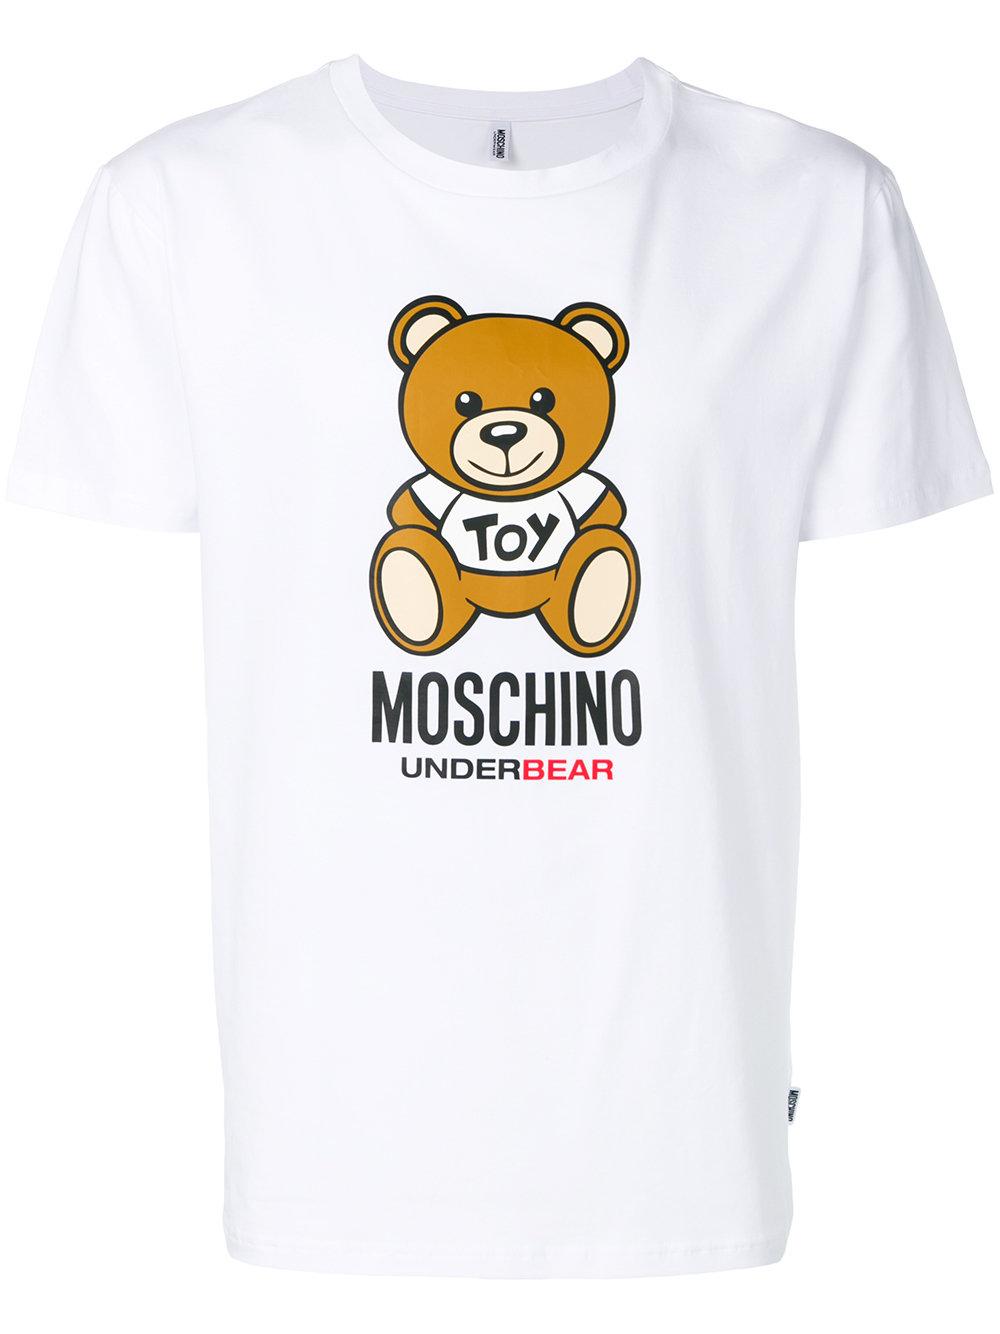 moschino underbear t-shirt